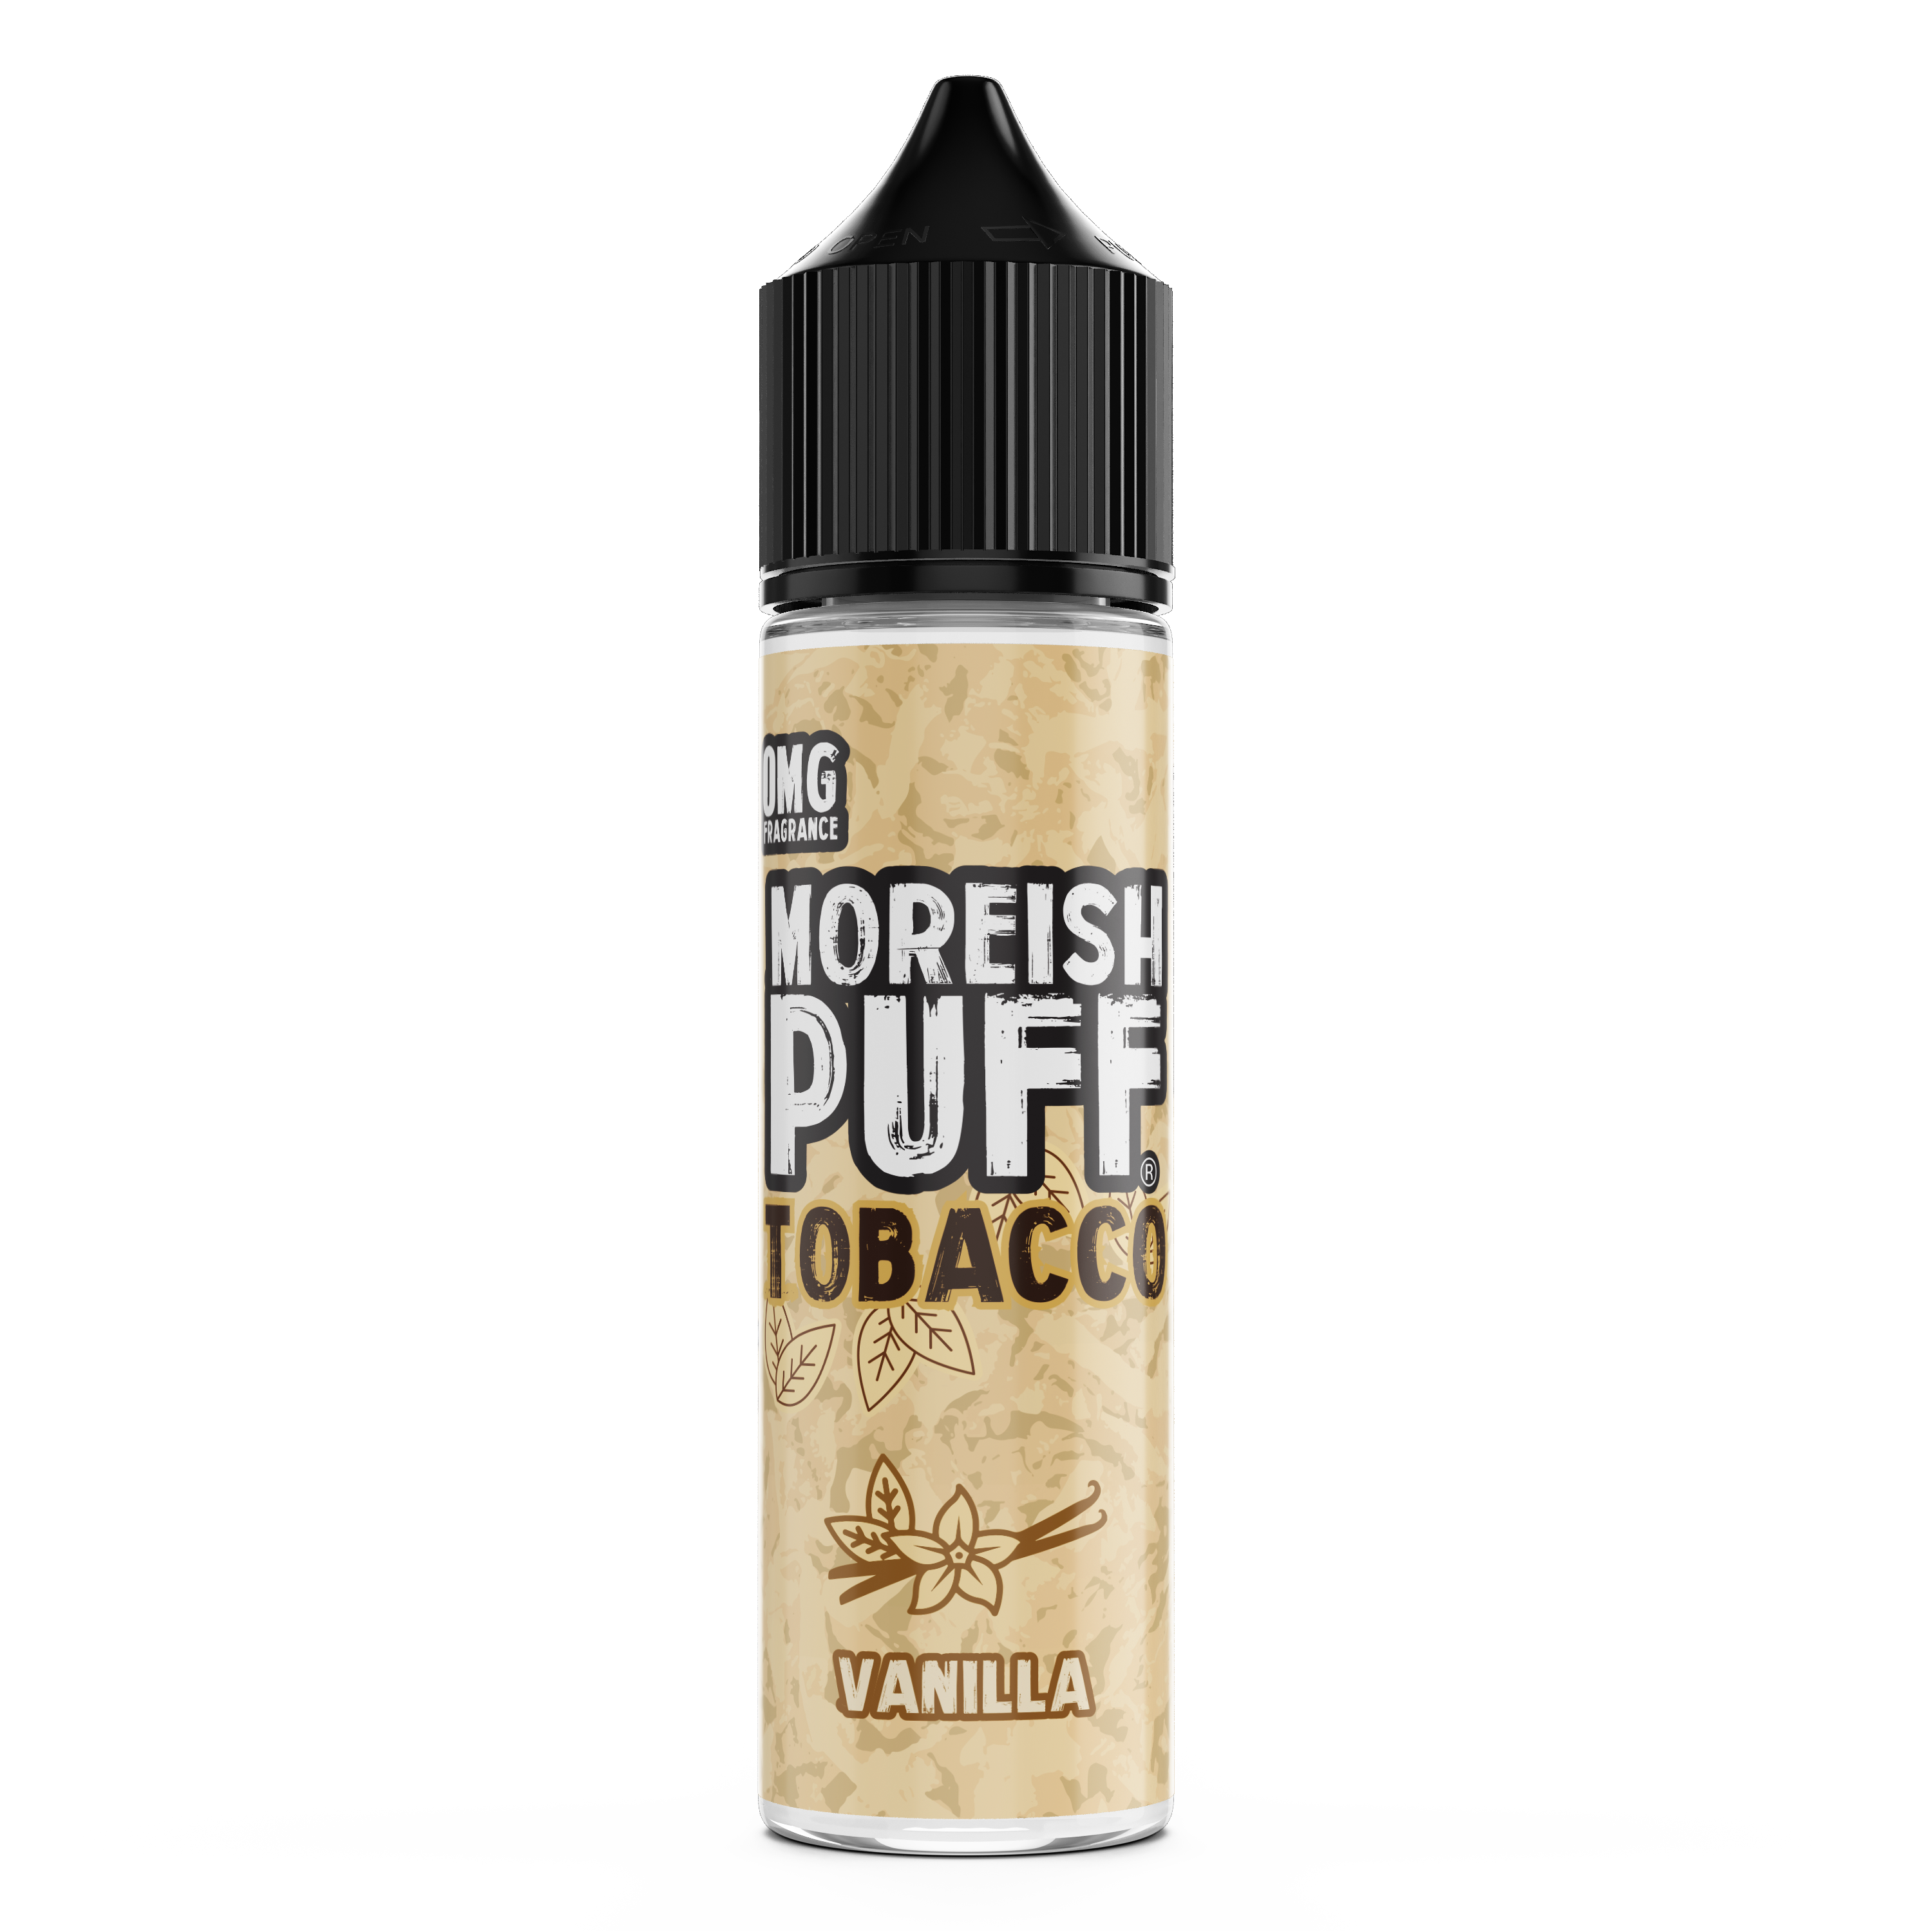 Moreish Puff Tobacco: Vanilla Tobacco 0mg 50ml Shortfill E-Liquid